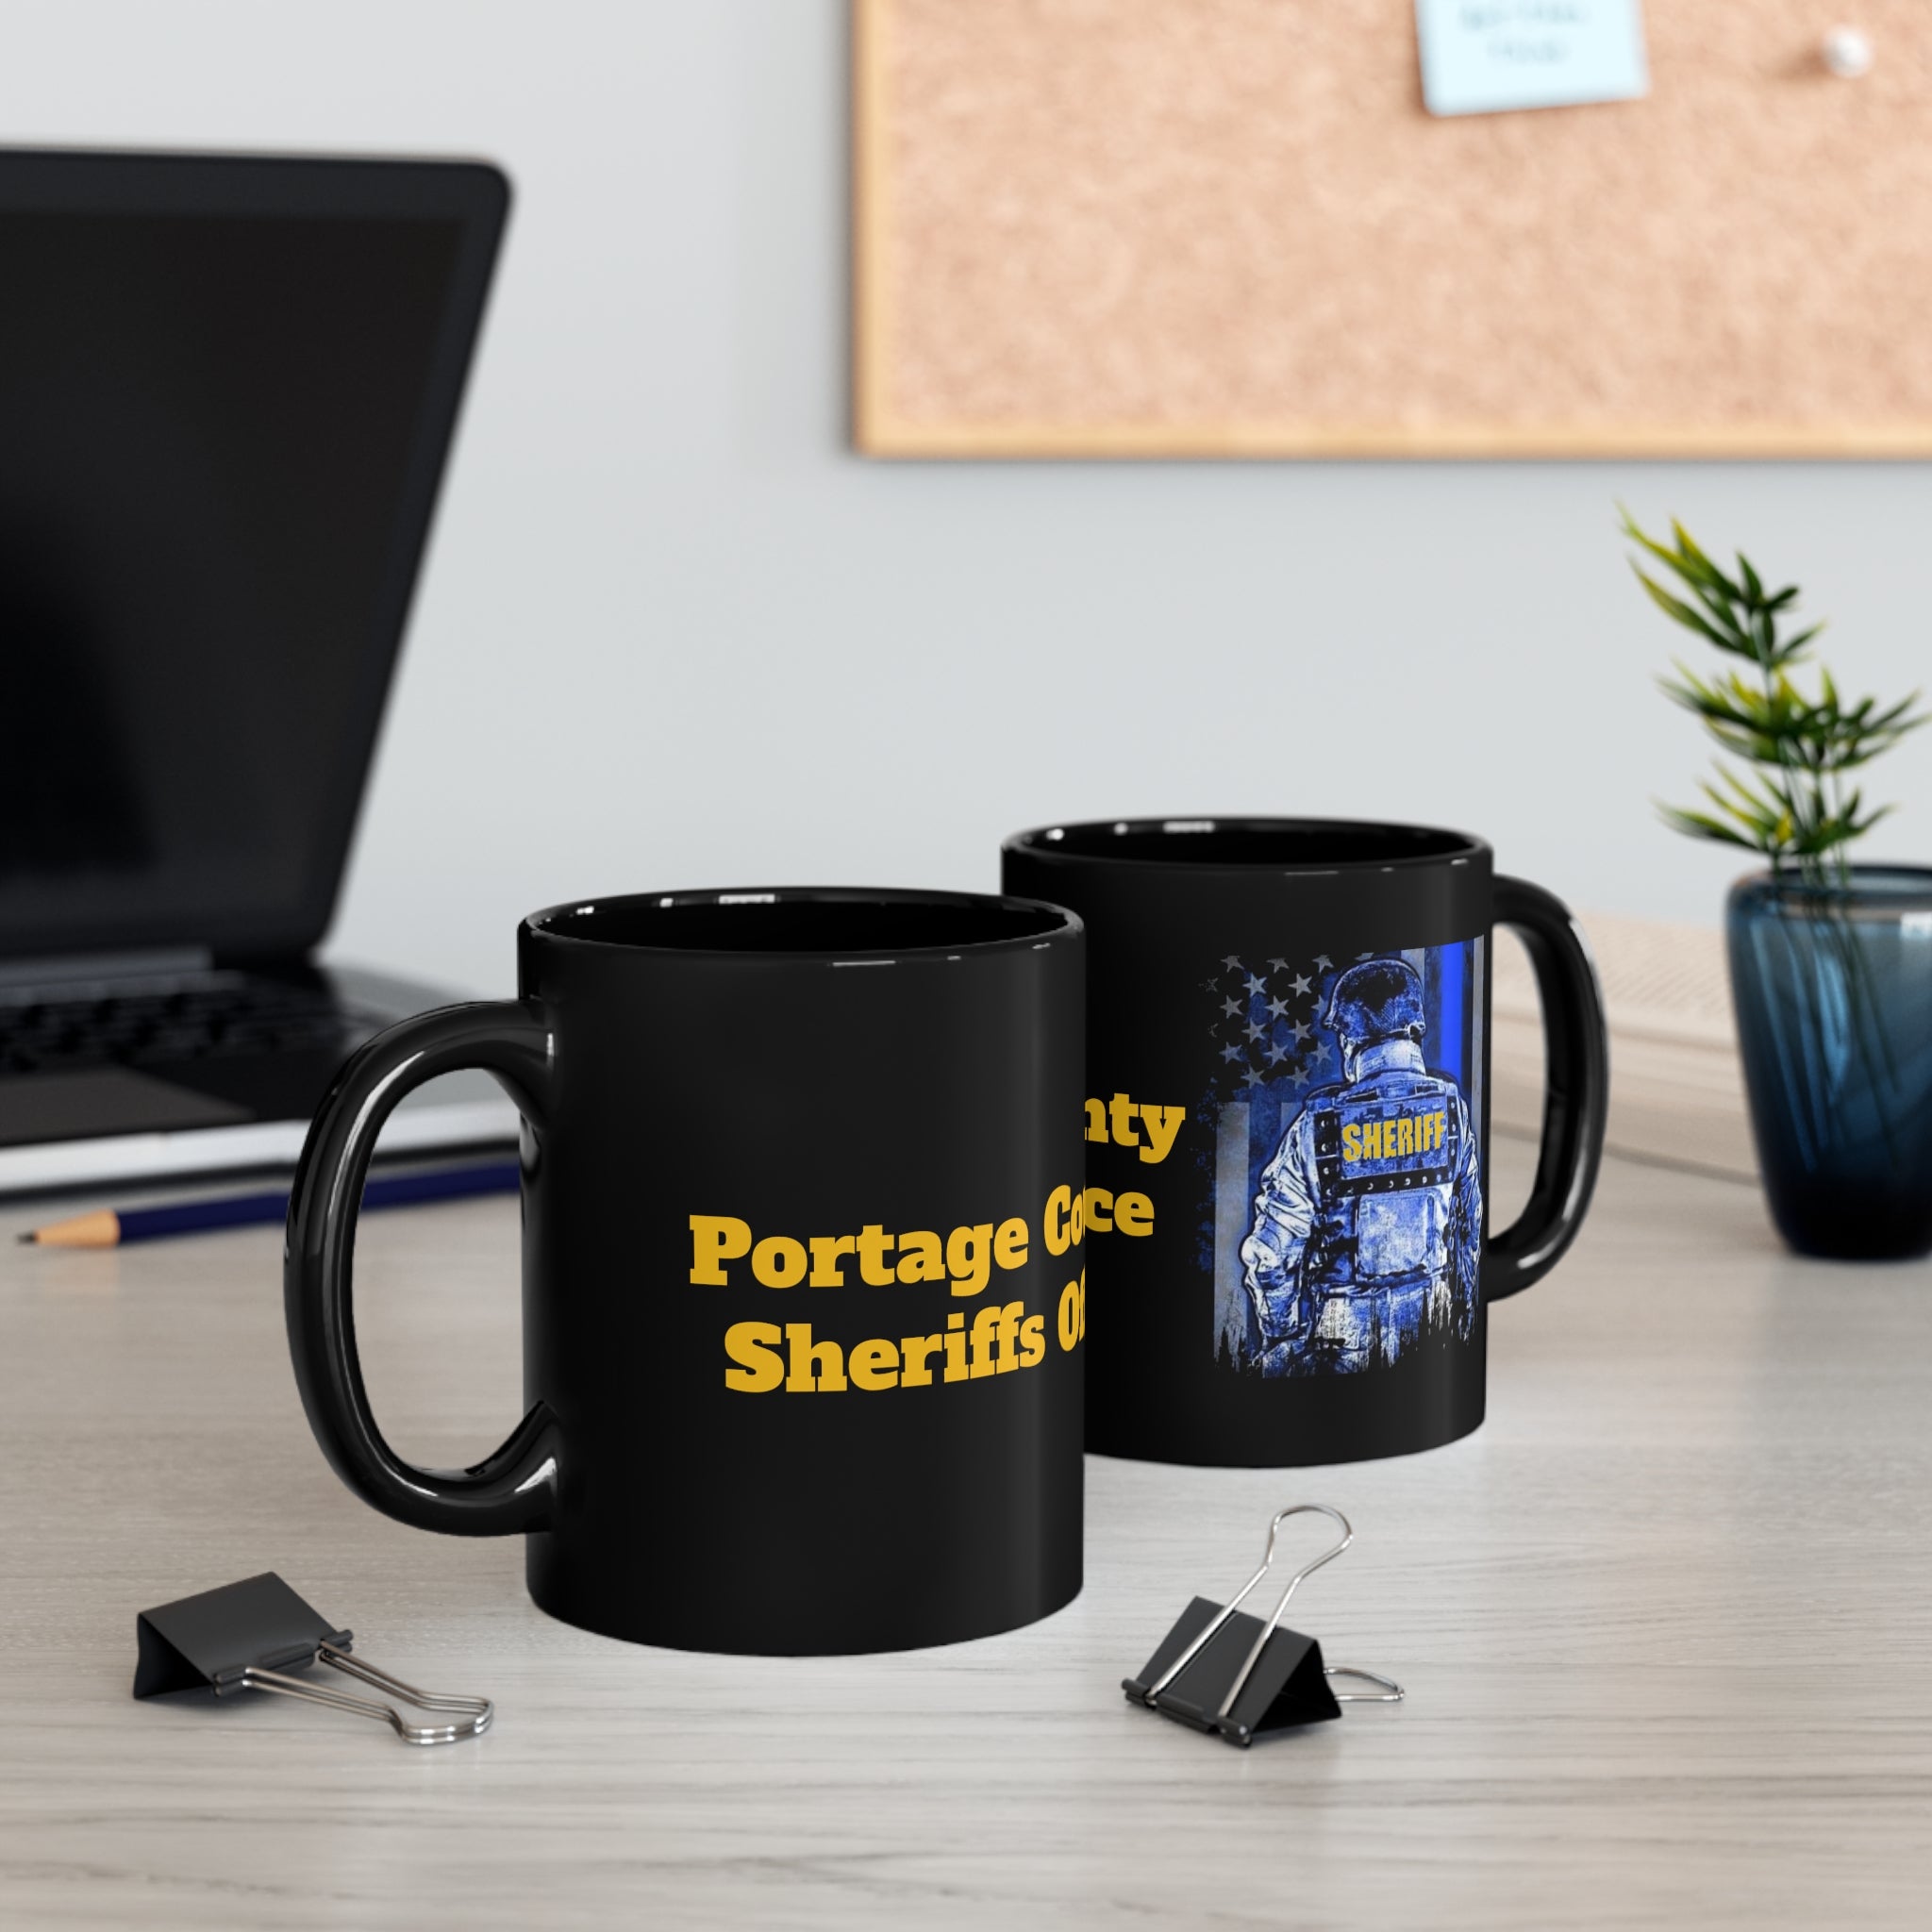 Black mug 11oz - Portage County Sheriffs Office